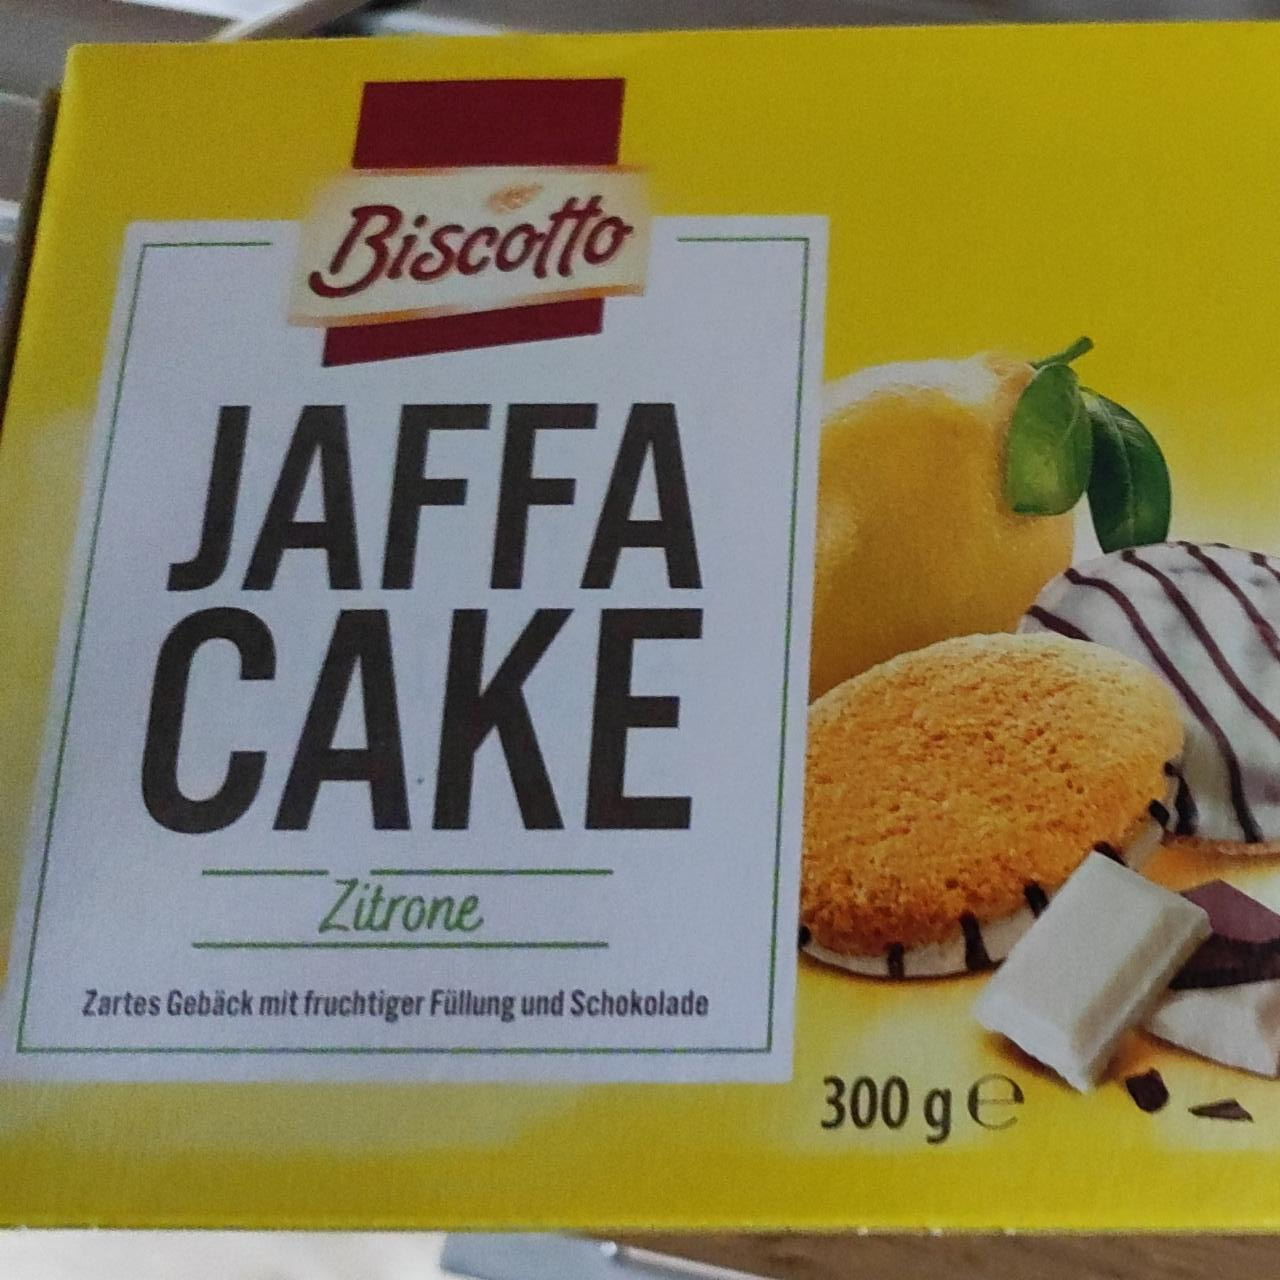 Fotografie - Jaffa cake Zitrone Biscotto